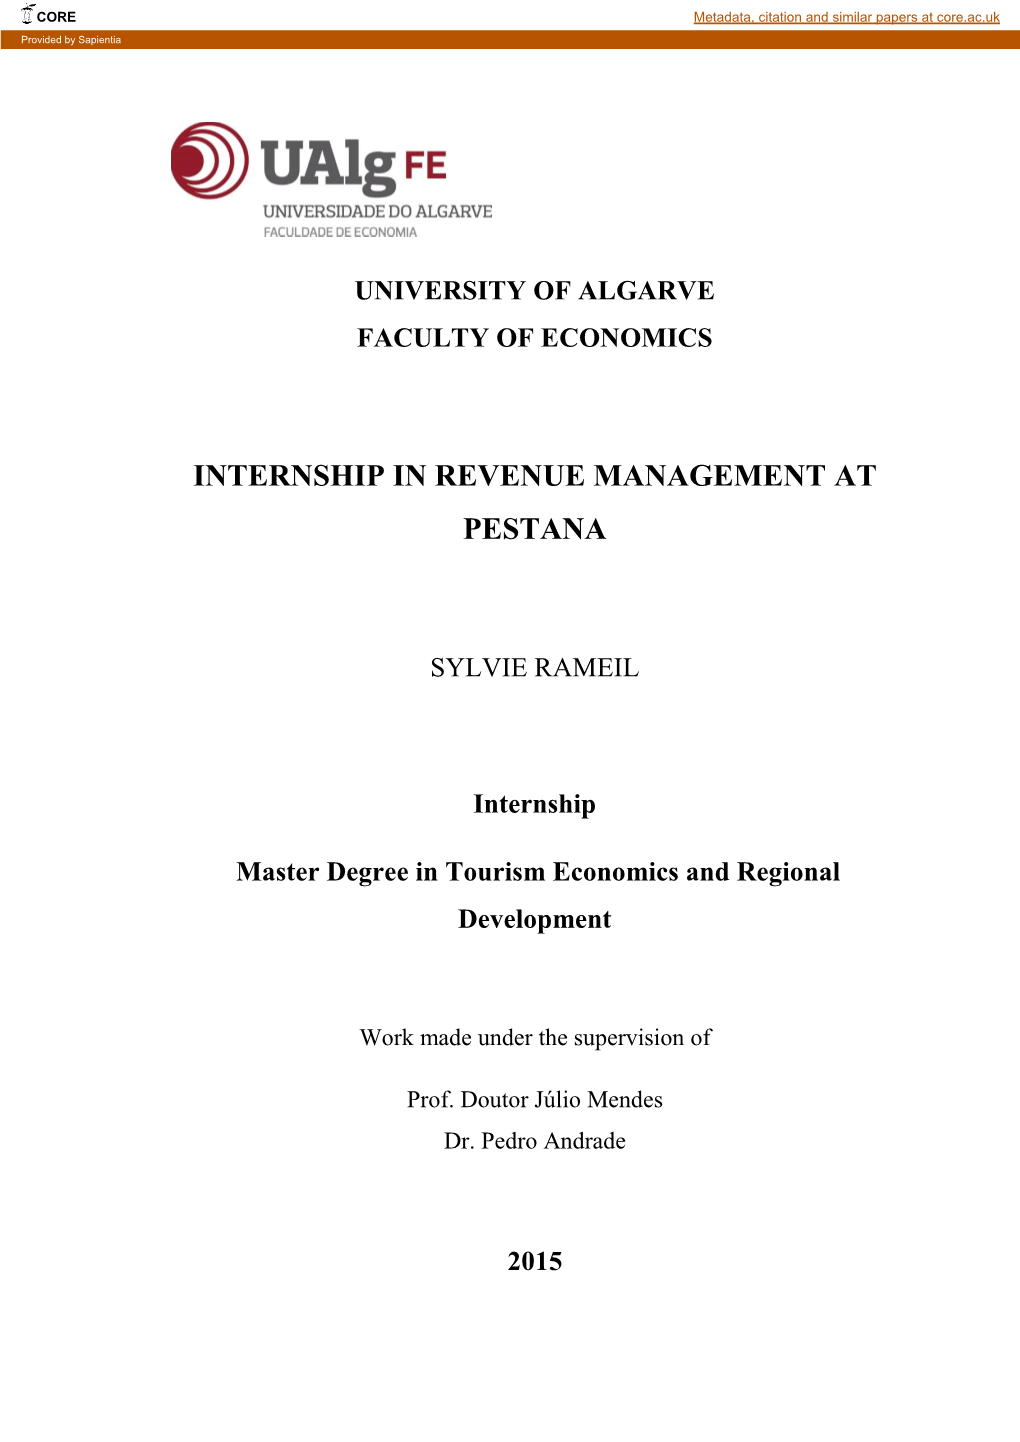 Internship in Revenue Management at Pestana